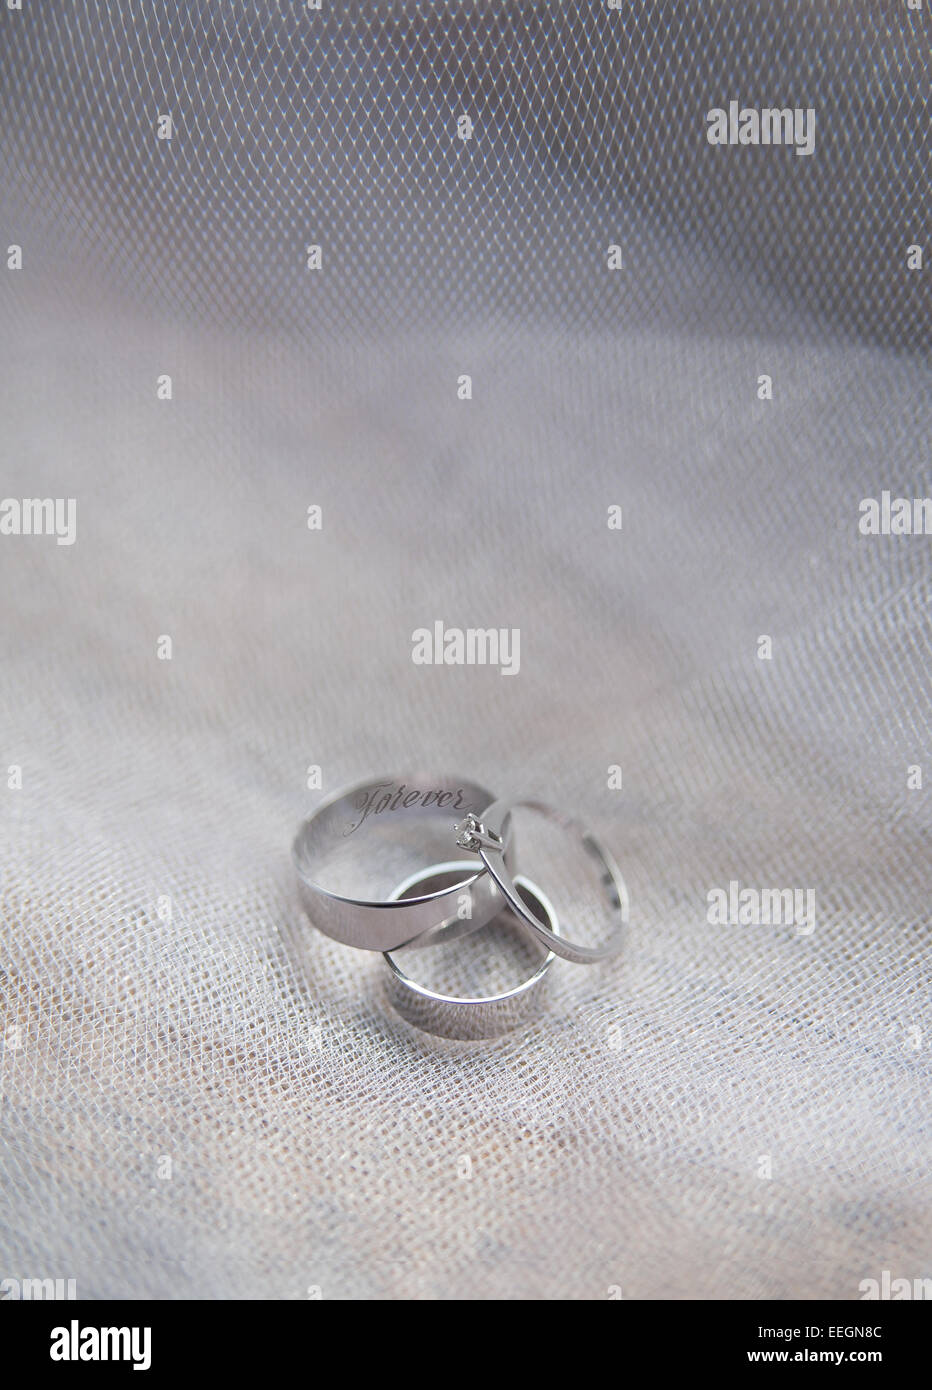 Platinum engagement and wedding ringson on fabric Stock Photo